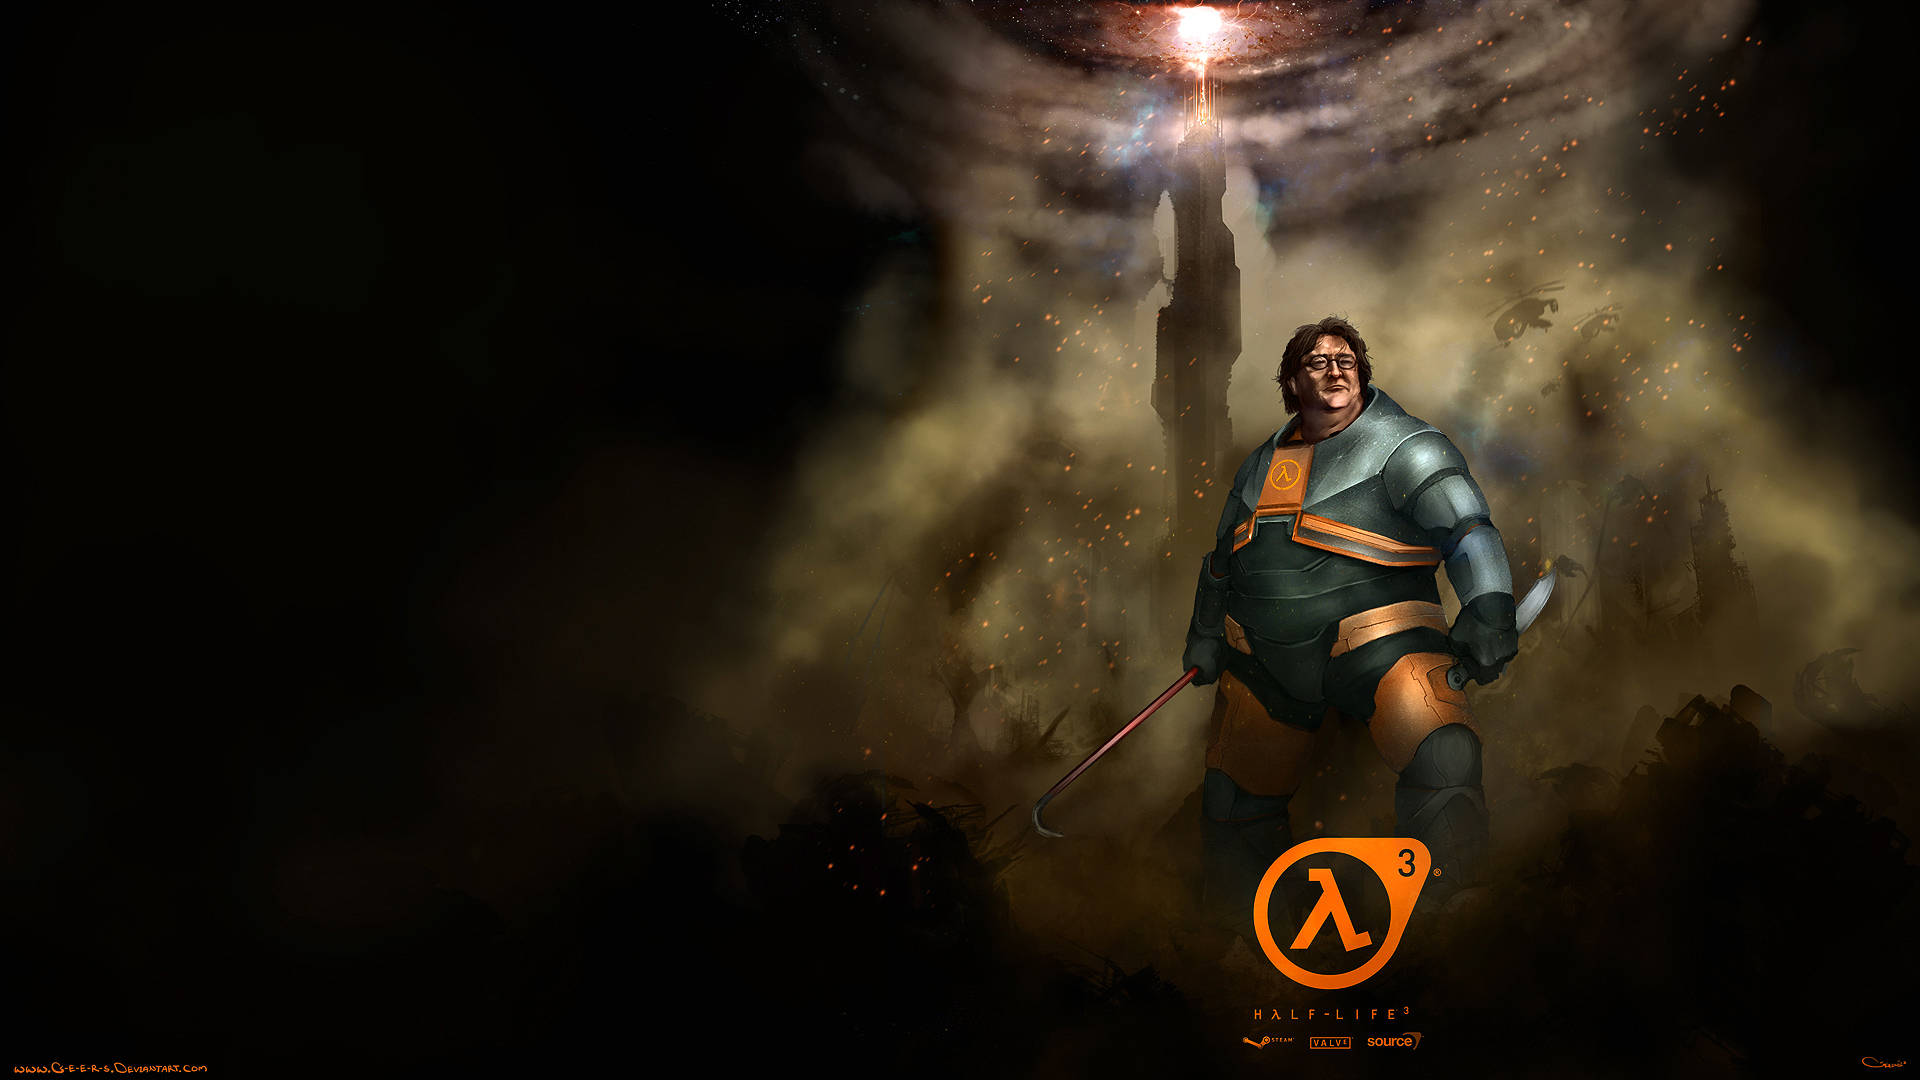 Half-life Gabe Newell Art Background